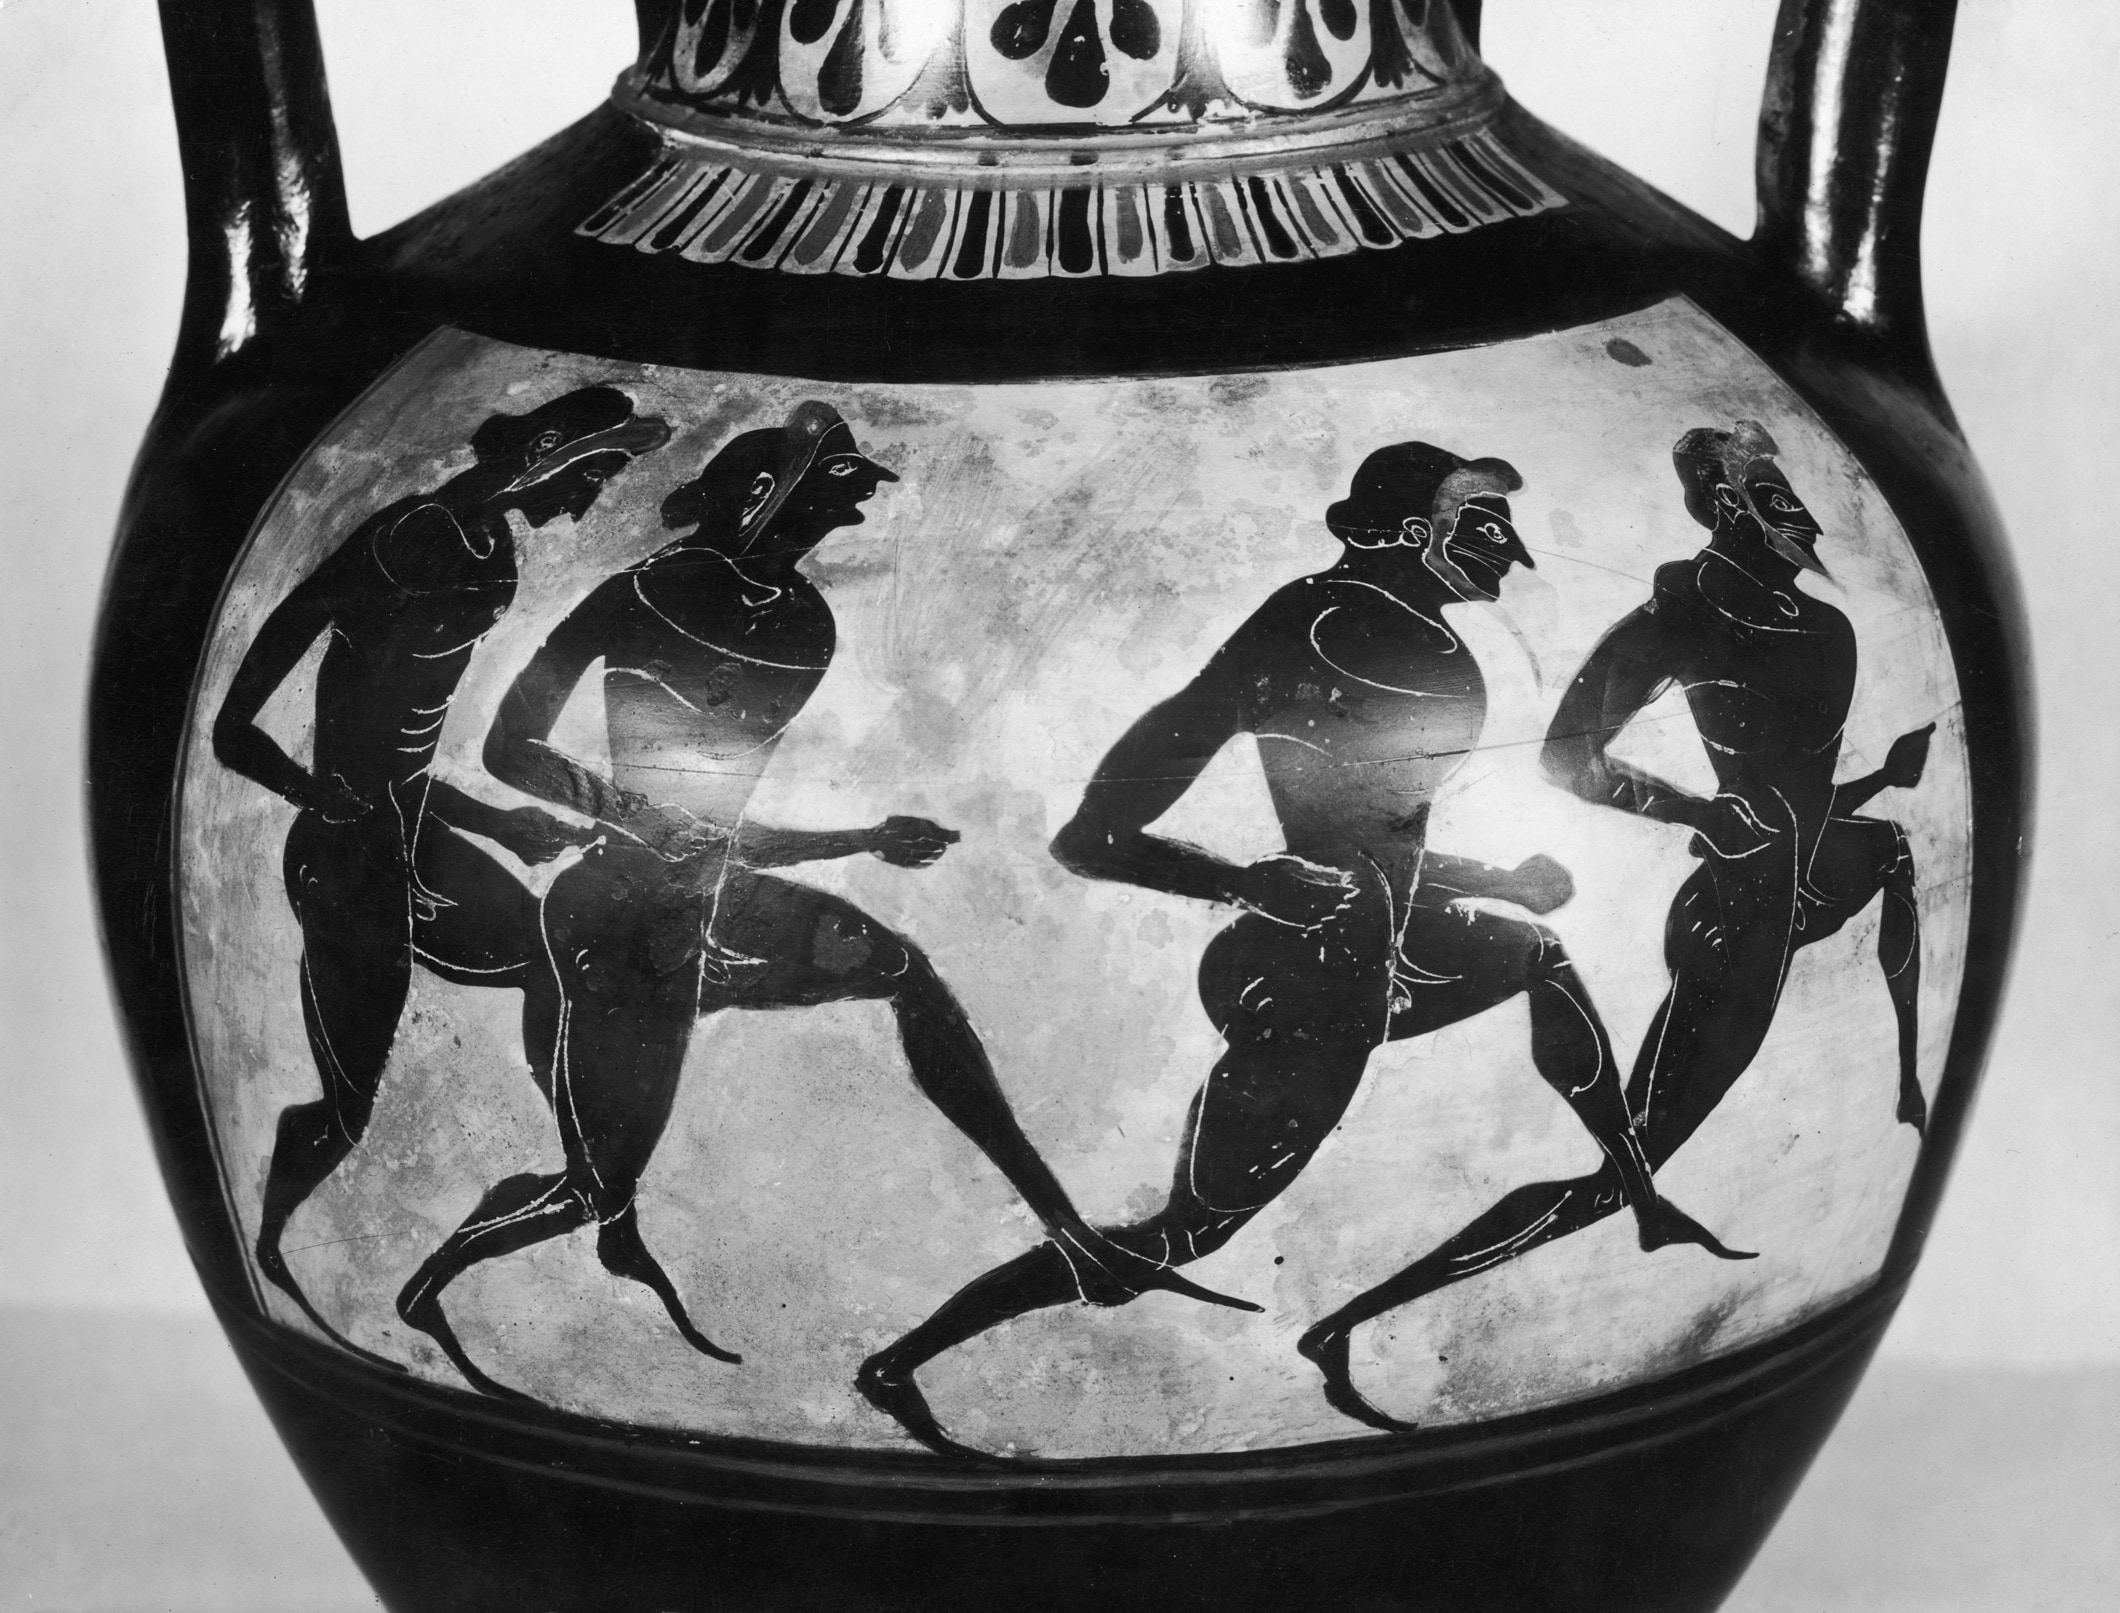 ancient greek olympics wrestling